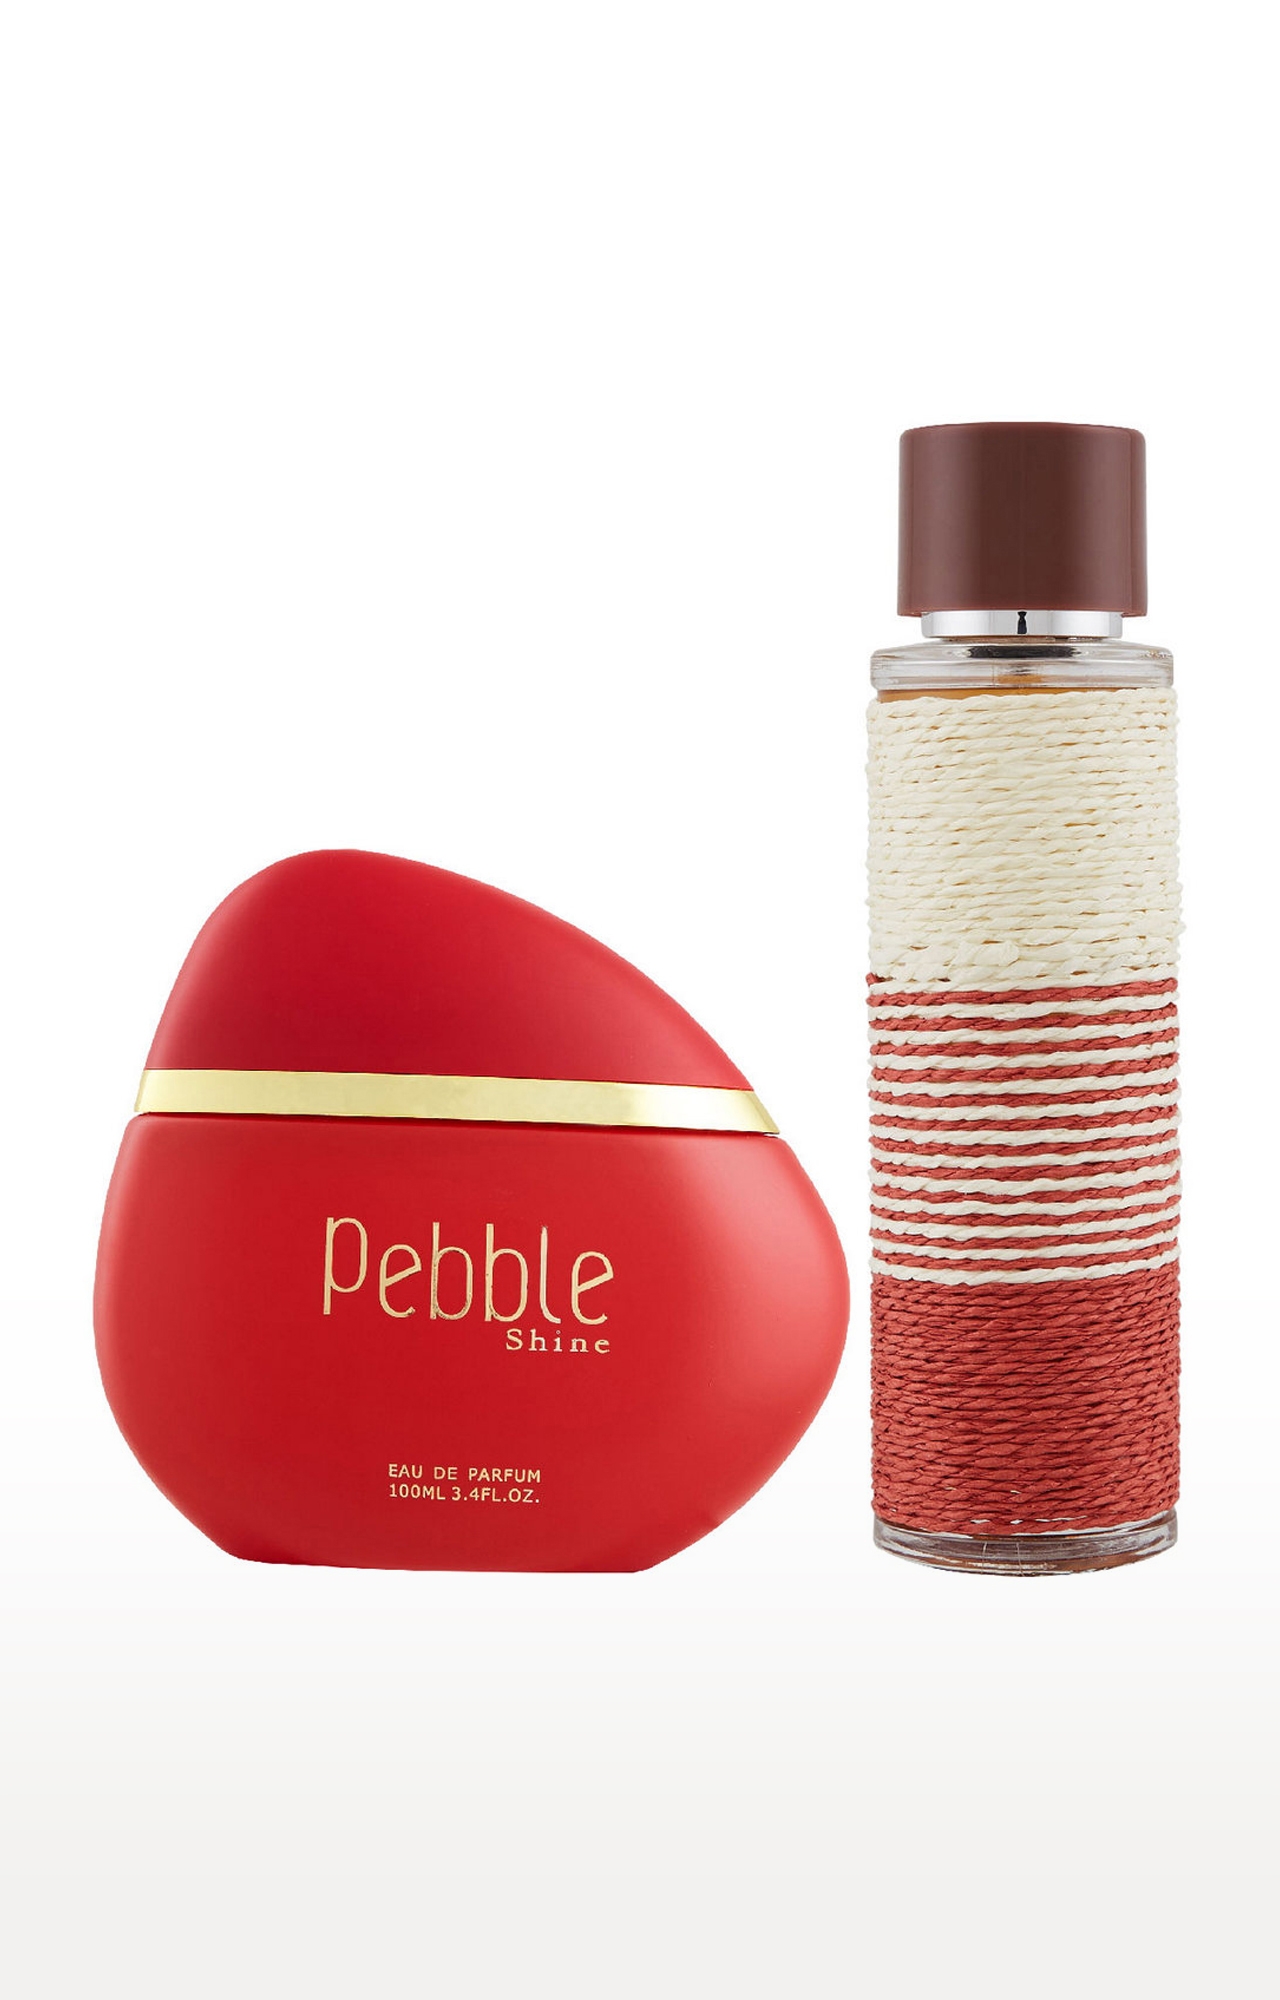 Maryaj Pebble Shine Eau De Parfum Fruity Perfume 100ml for Women and Maryaj Deuce Homme Eau De Parfum Perfume 100ml for Men